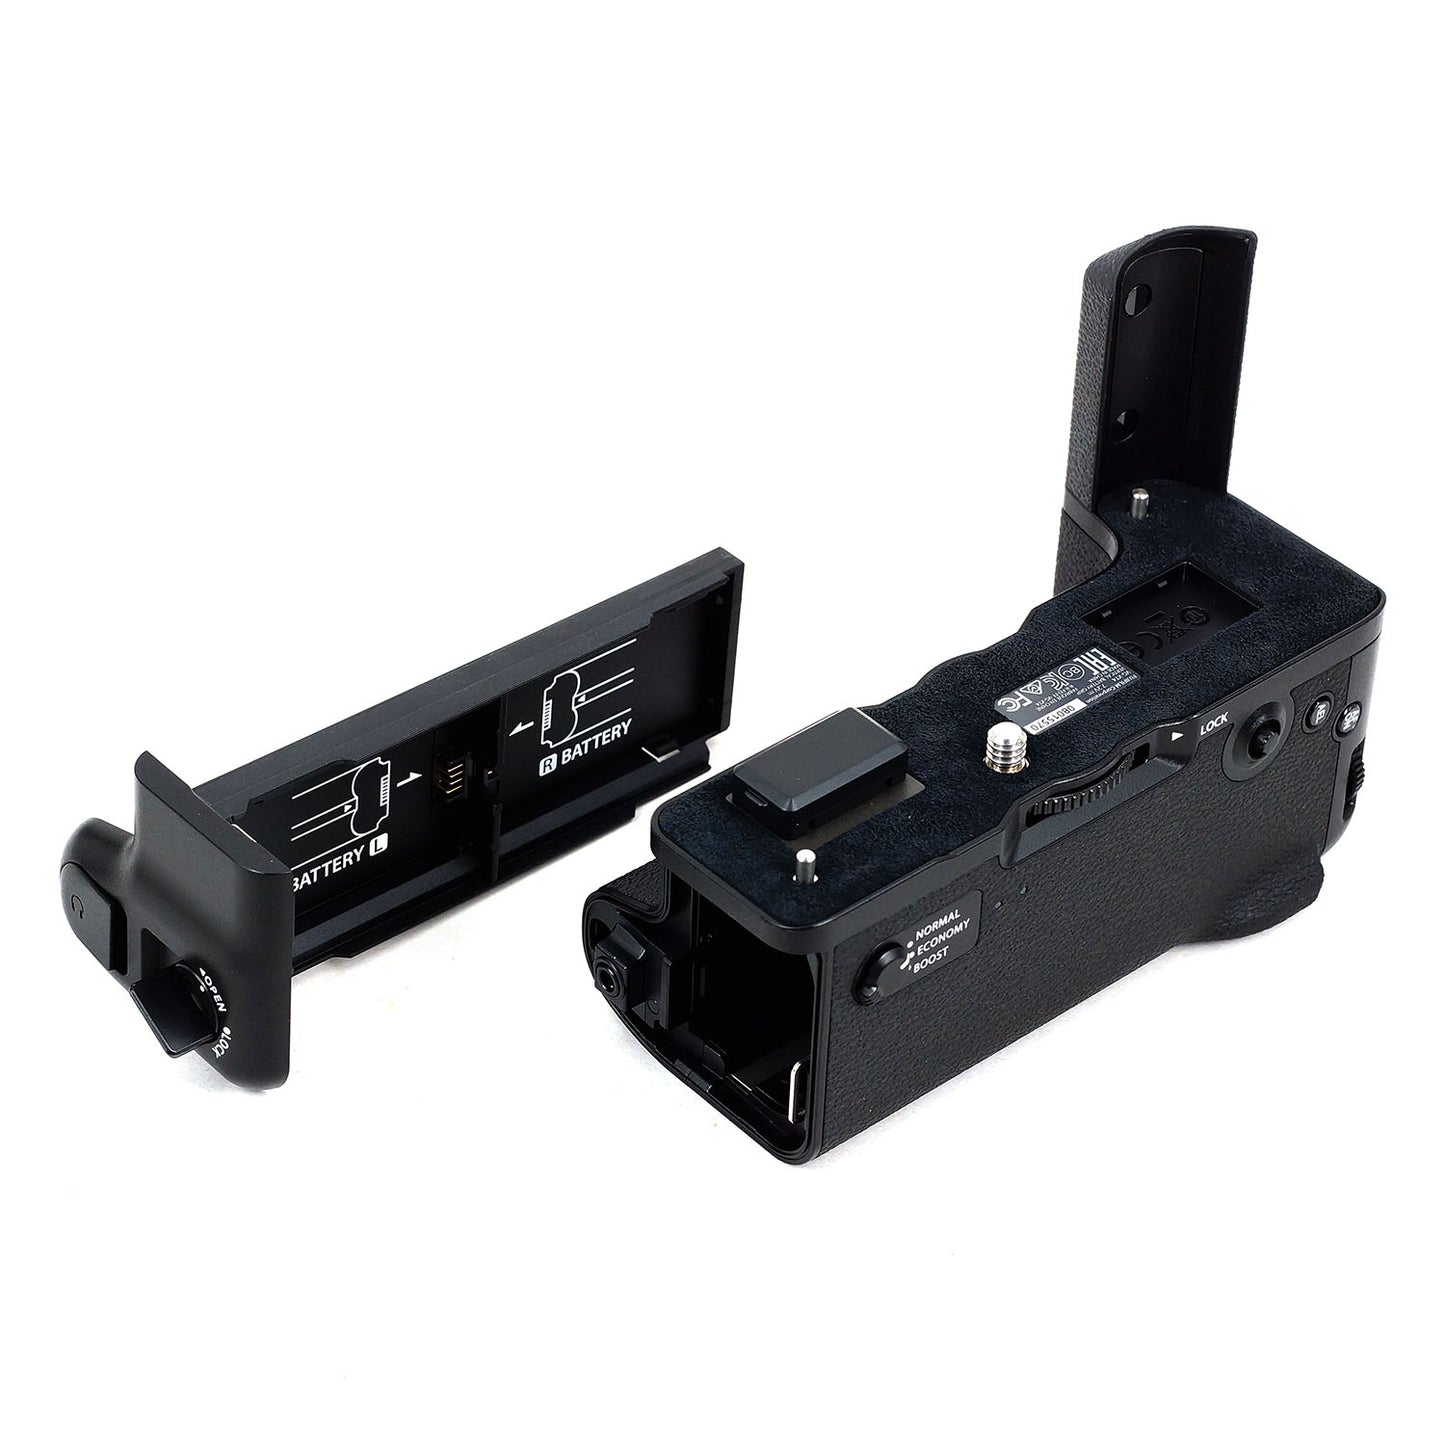 Genuine New Boxed VG-XT4 Vertical Battery Grip for Fujifilm X-T4 XT4 Camera